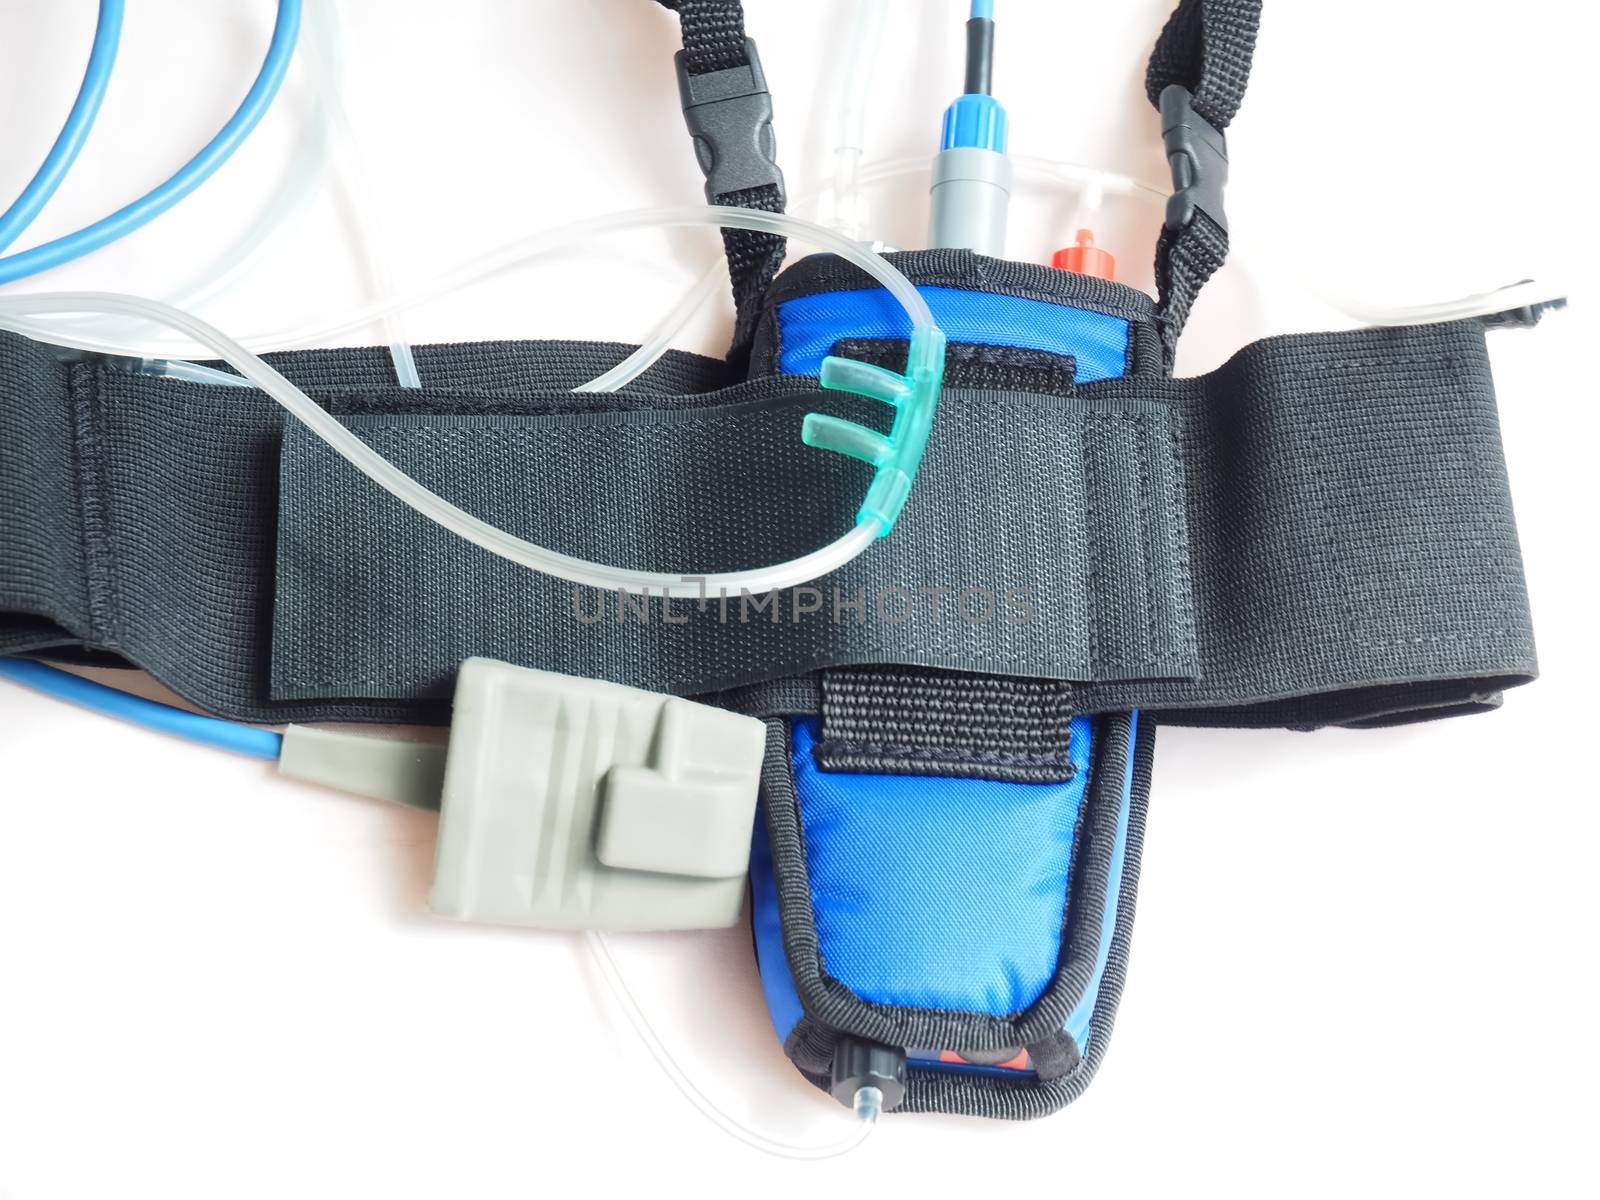 Medical Sleep monitoring equipment to measure snoring and sleep apnea